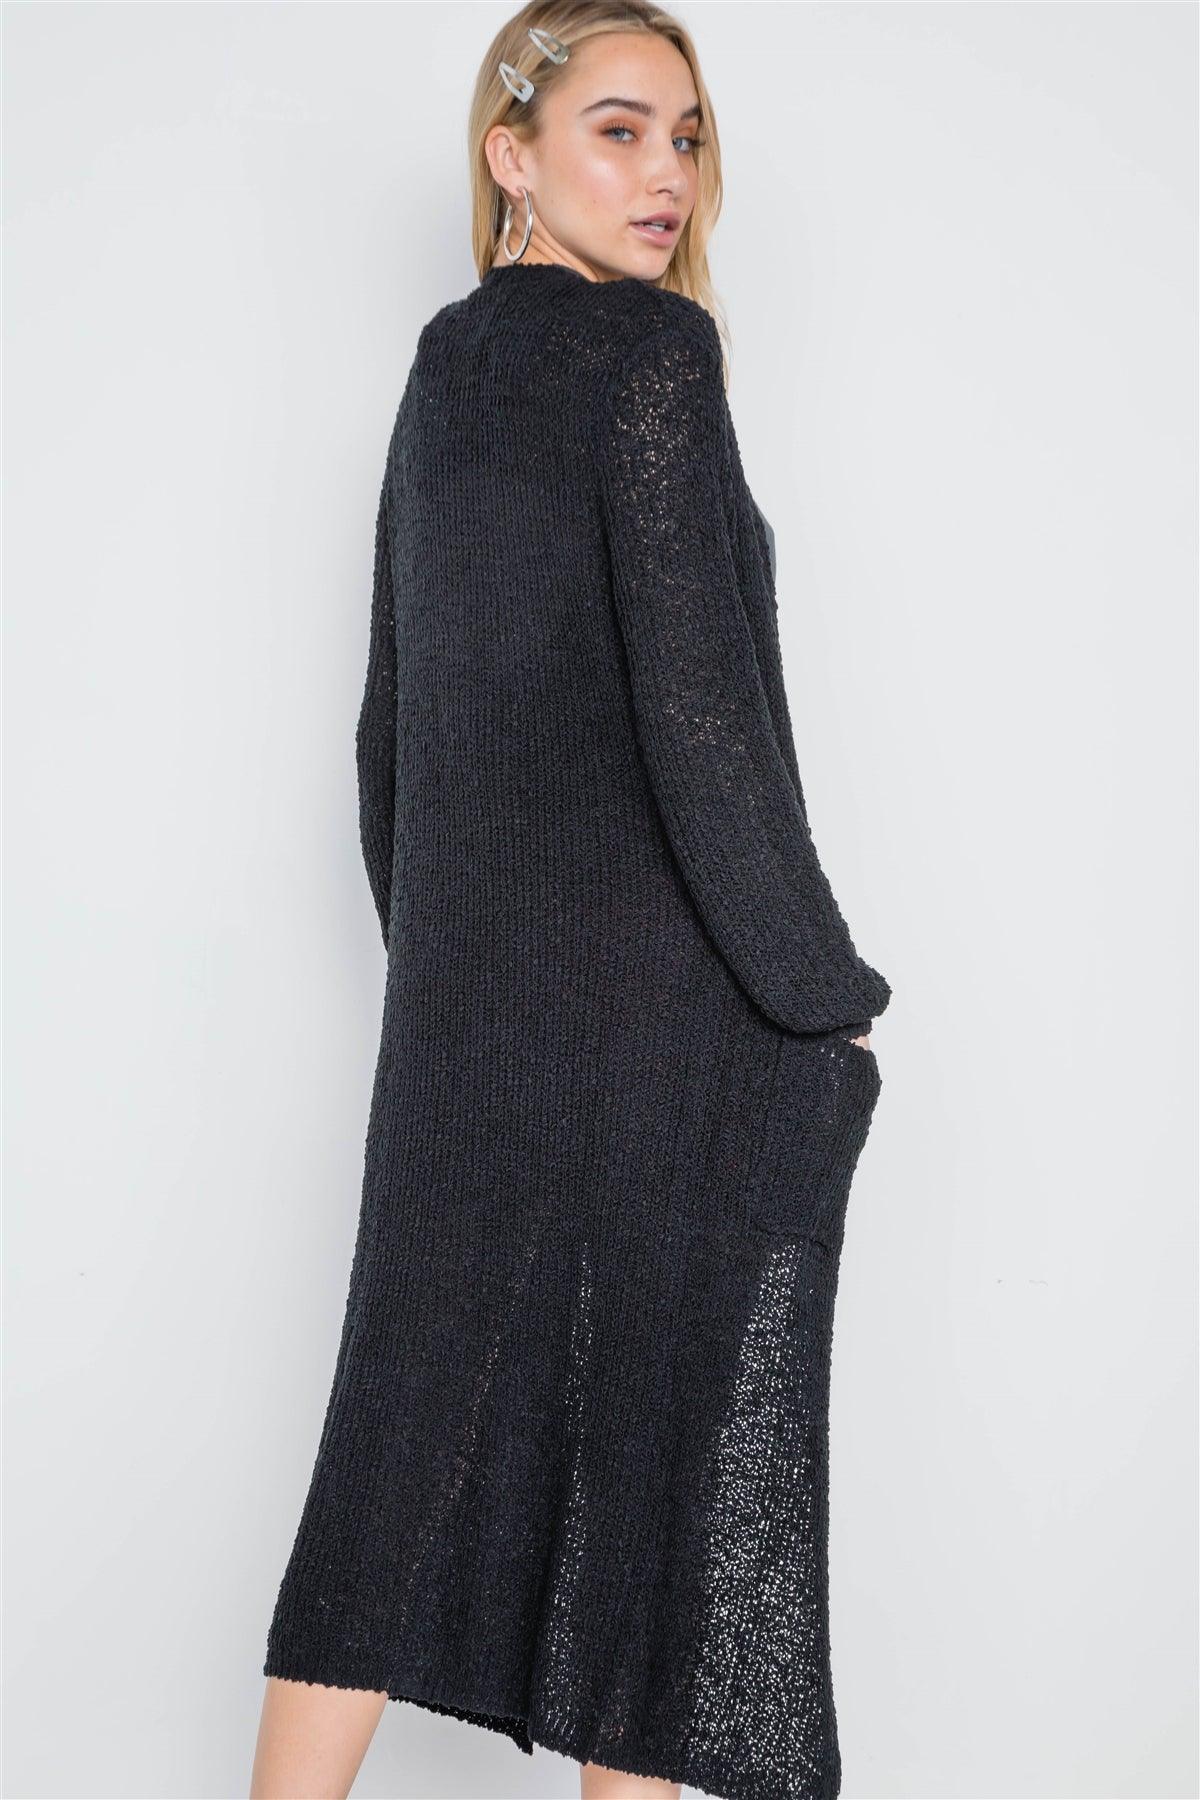 Black Long Sleeve Open Front Knit Cardigan /3-3